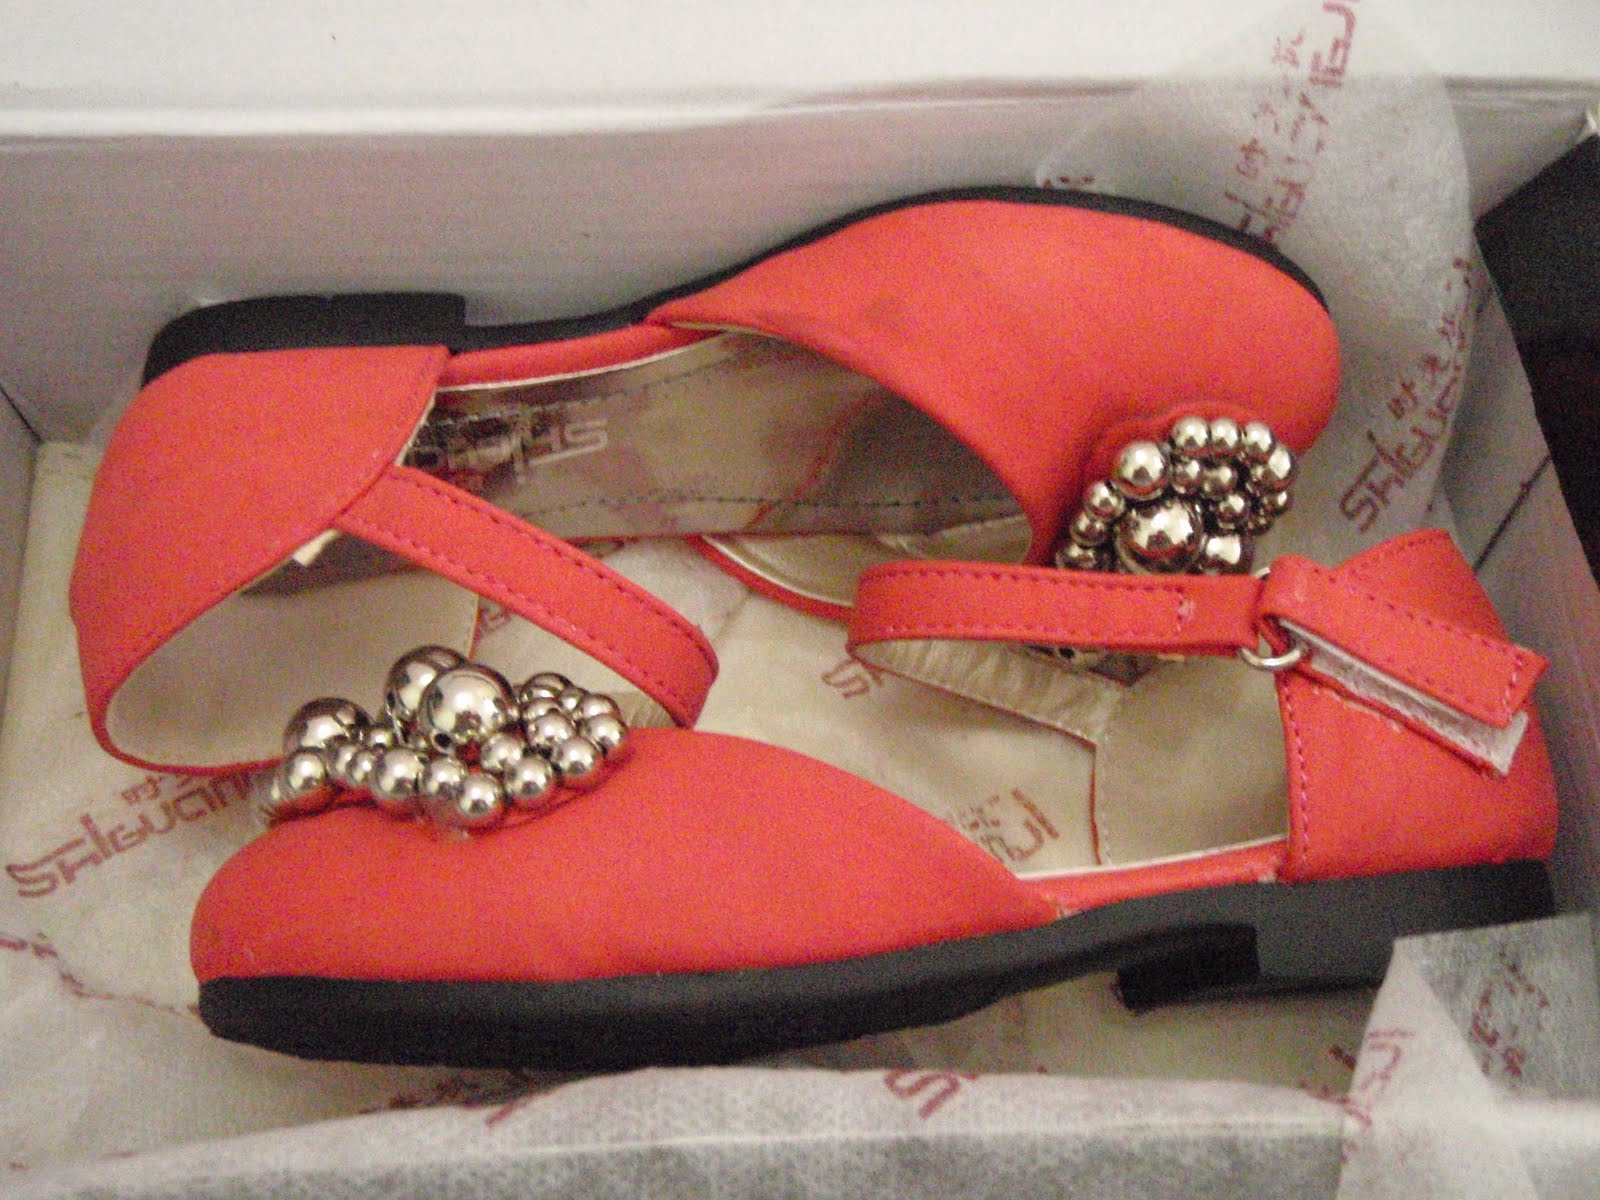 Replica Gucci & LV kids shoes: July 2011